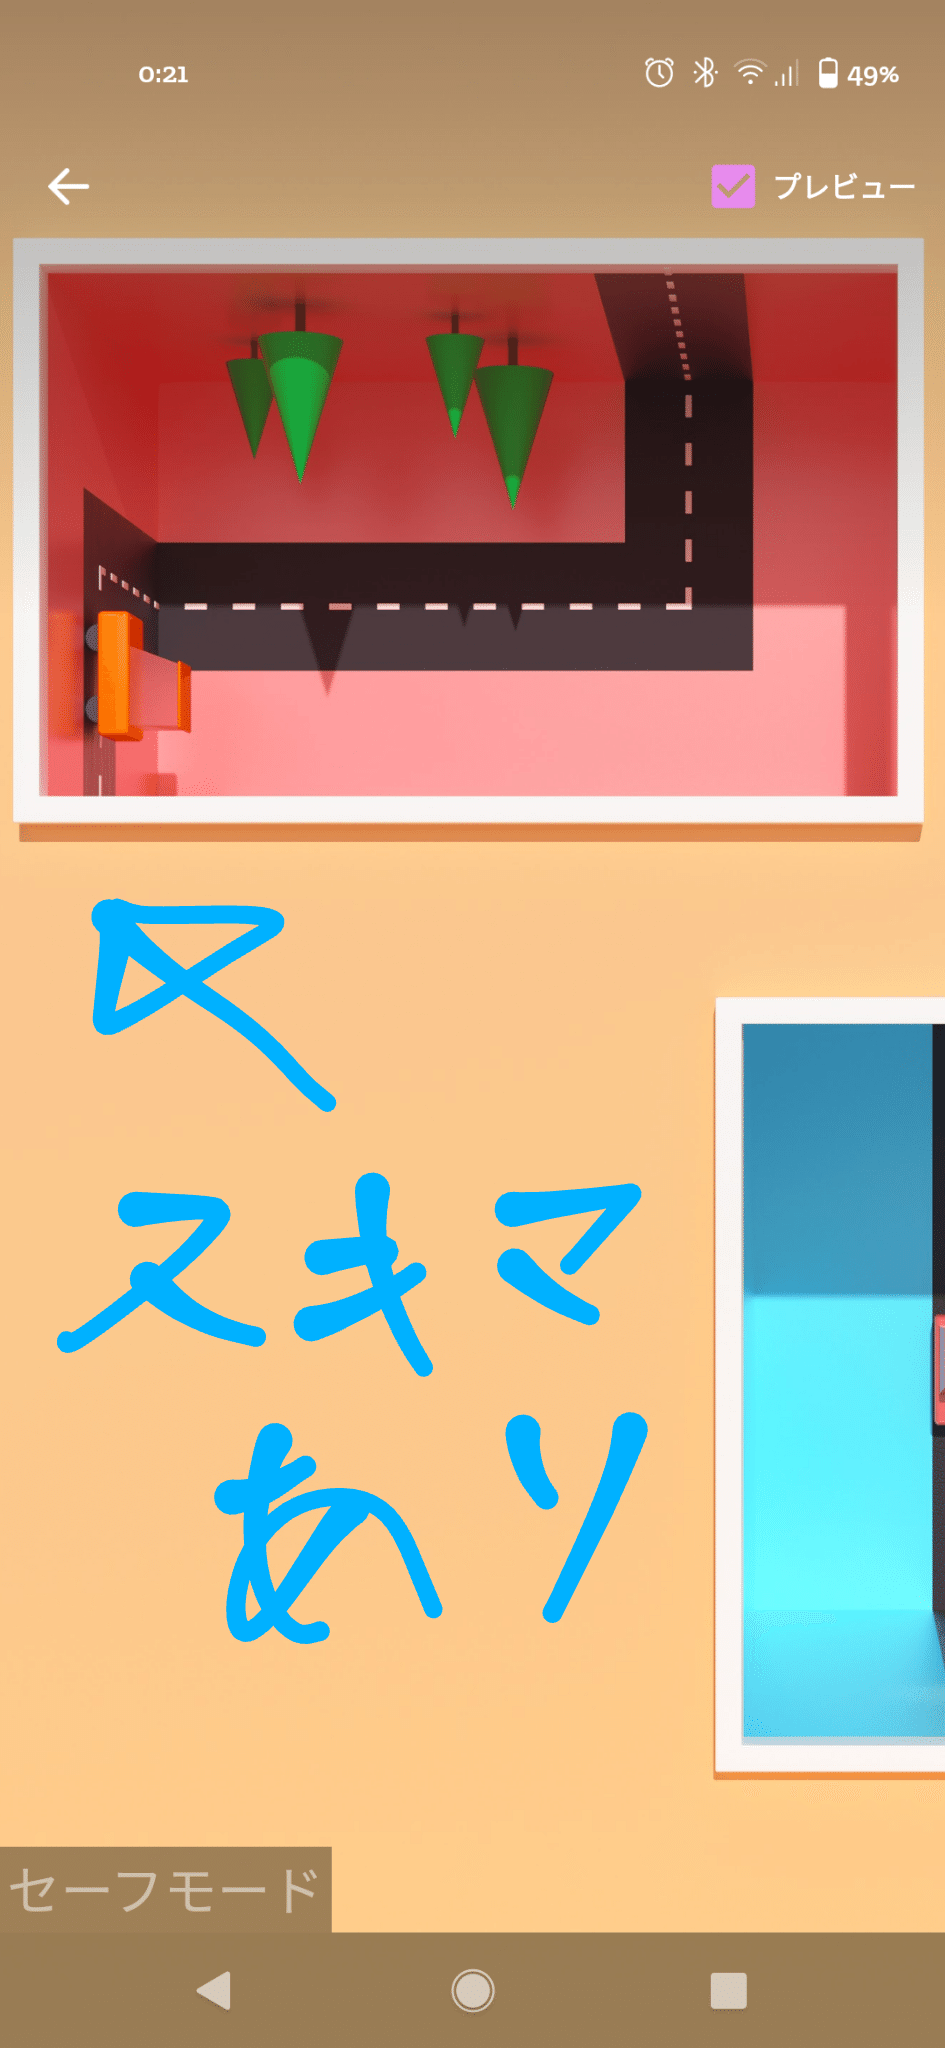 Pixel 4a 壁紙が設定サイズよりも拡大されてしまう件について 8zawa Note